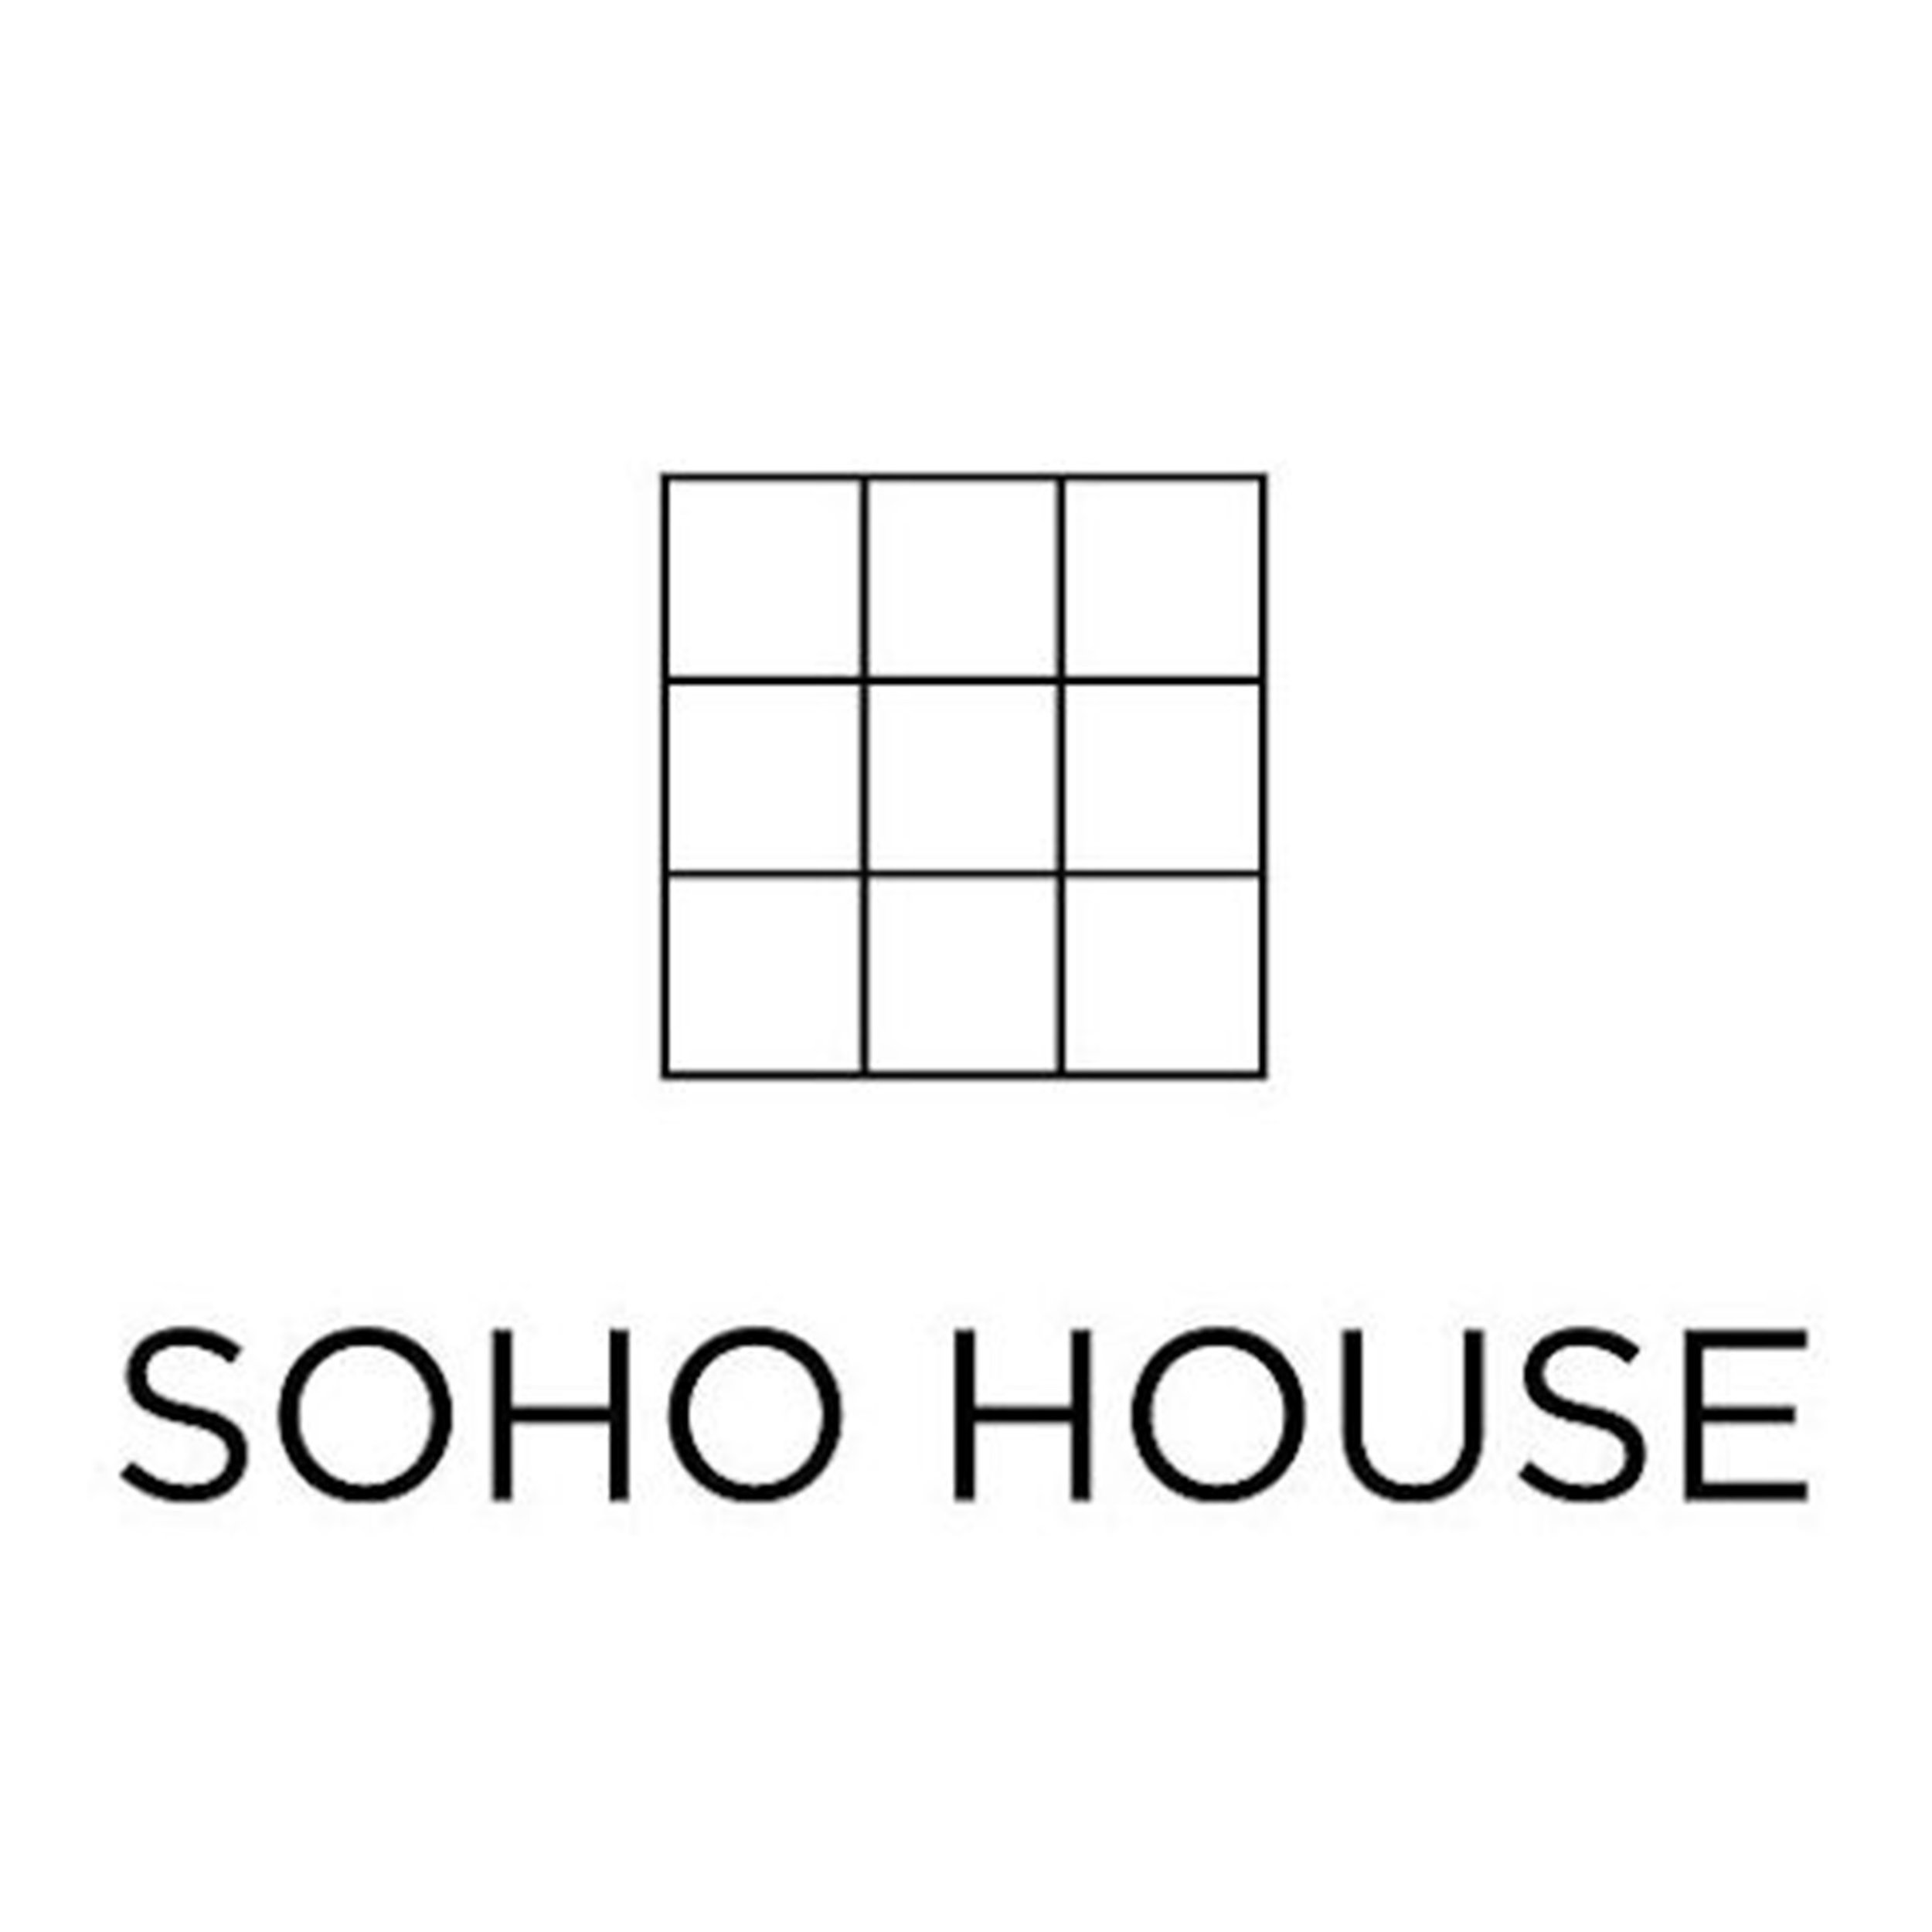 soho house logo.jpg